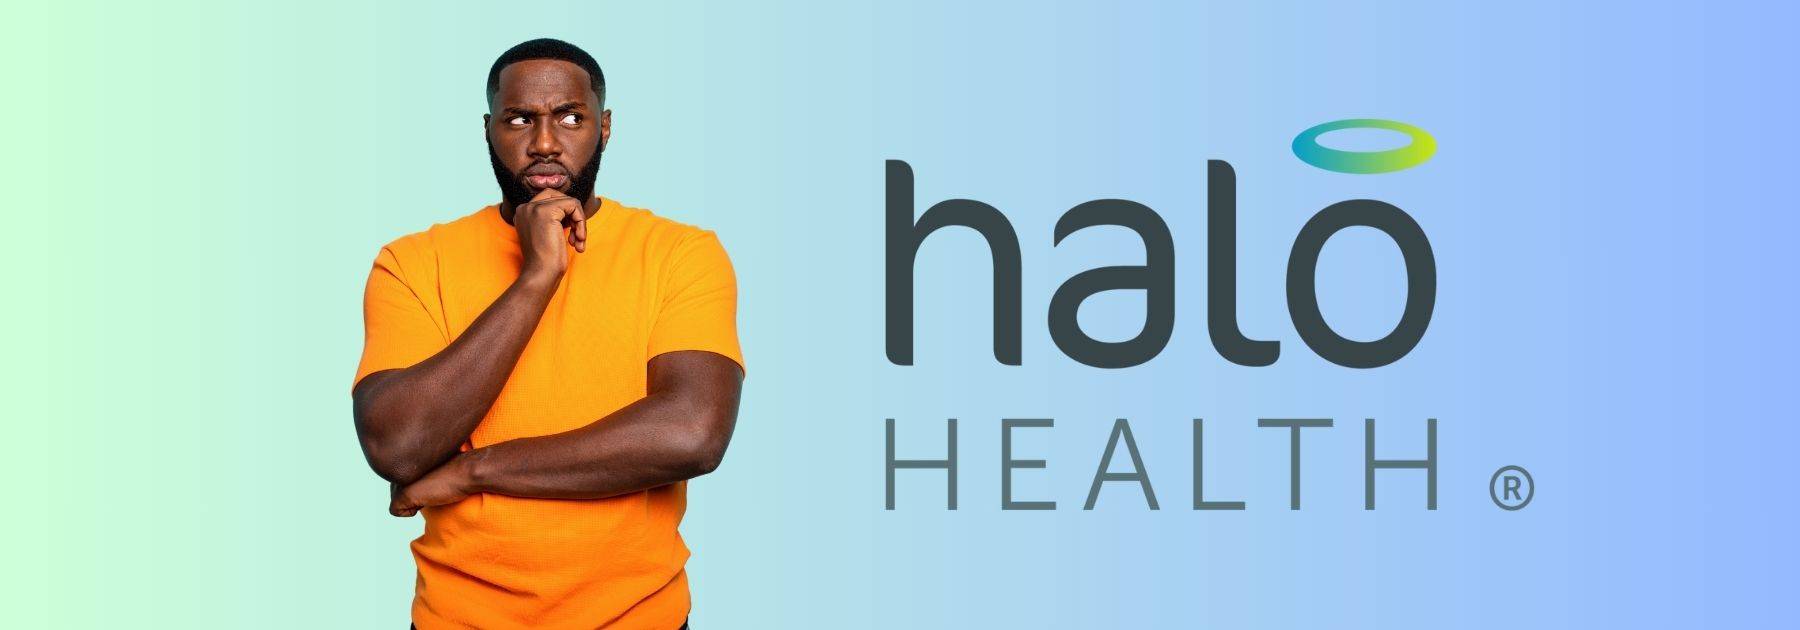 halo health online pharmacy